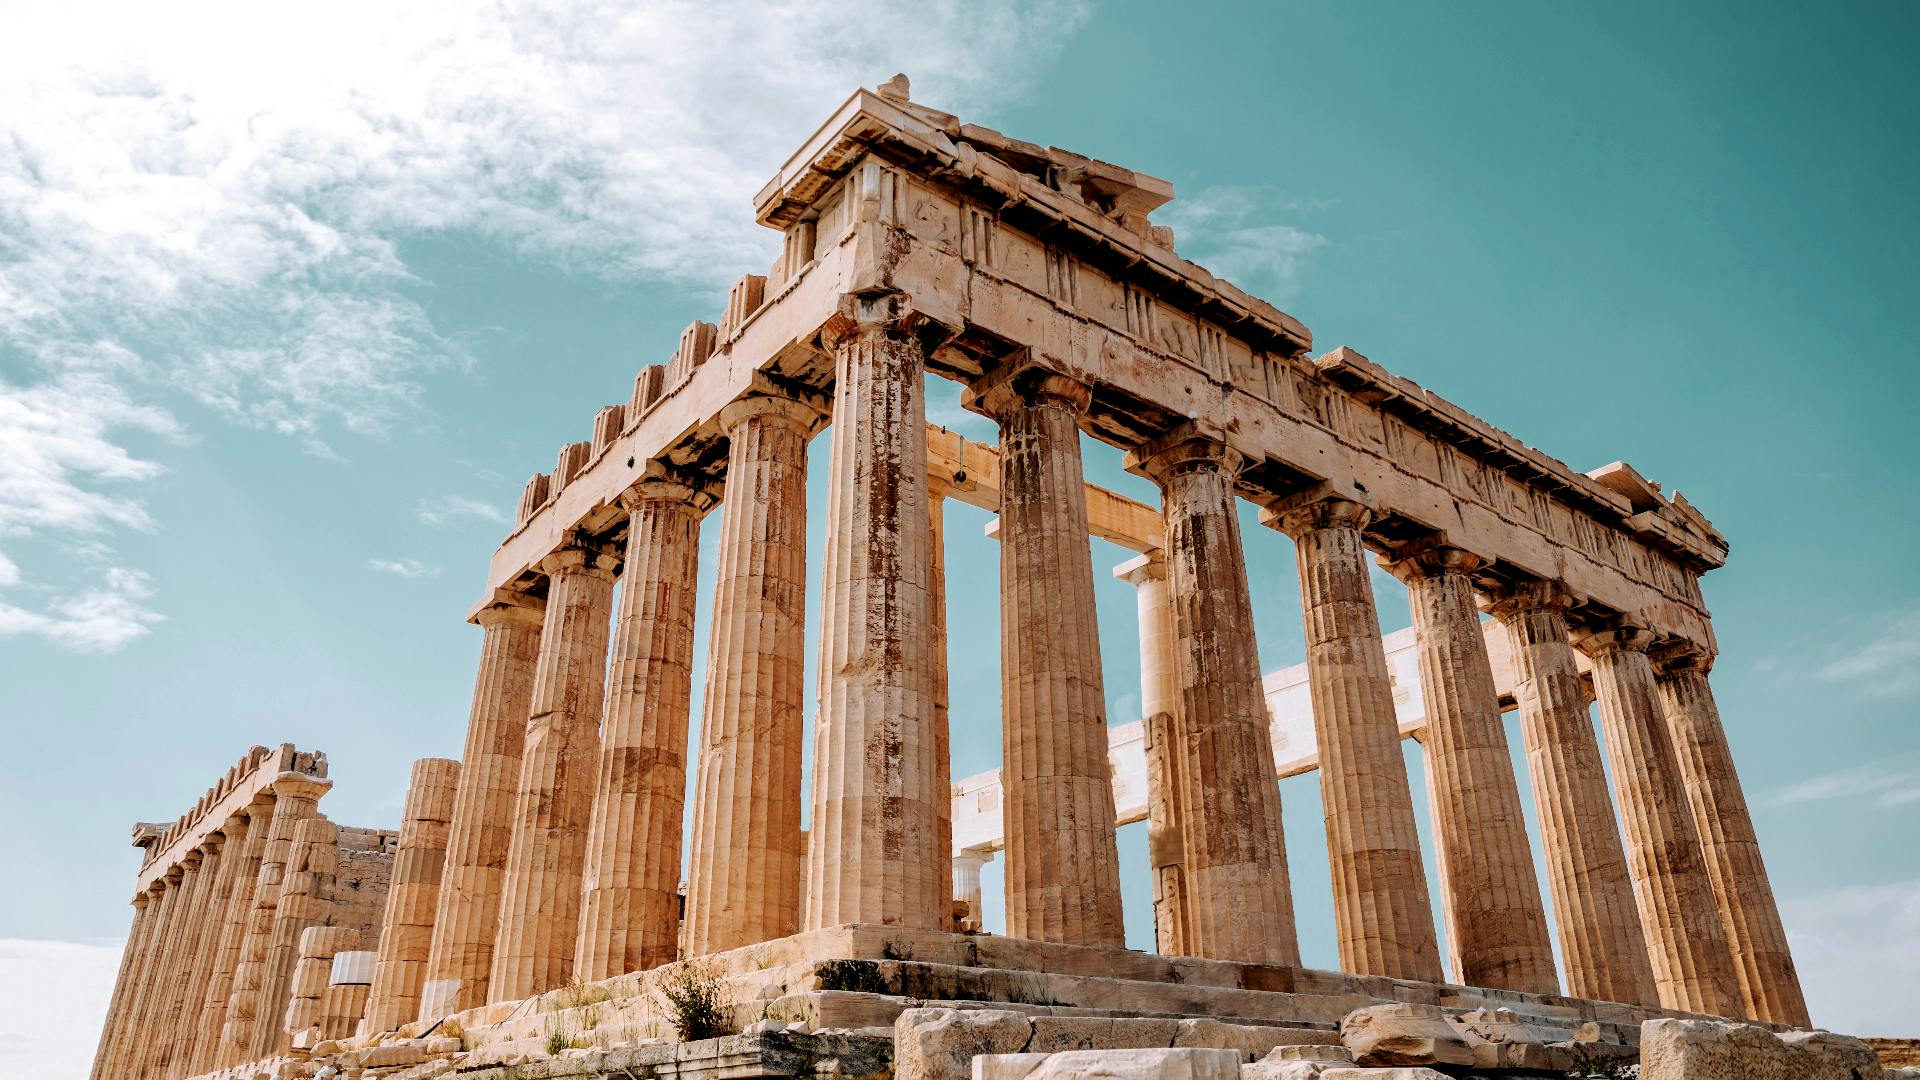 Passeggiata alla scoperta autoguidata ad Atene, gemme nascoste e storia